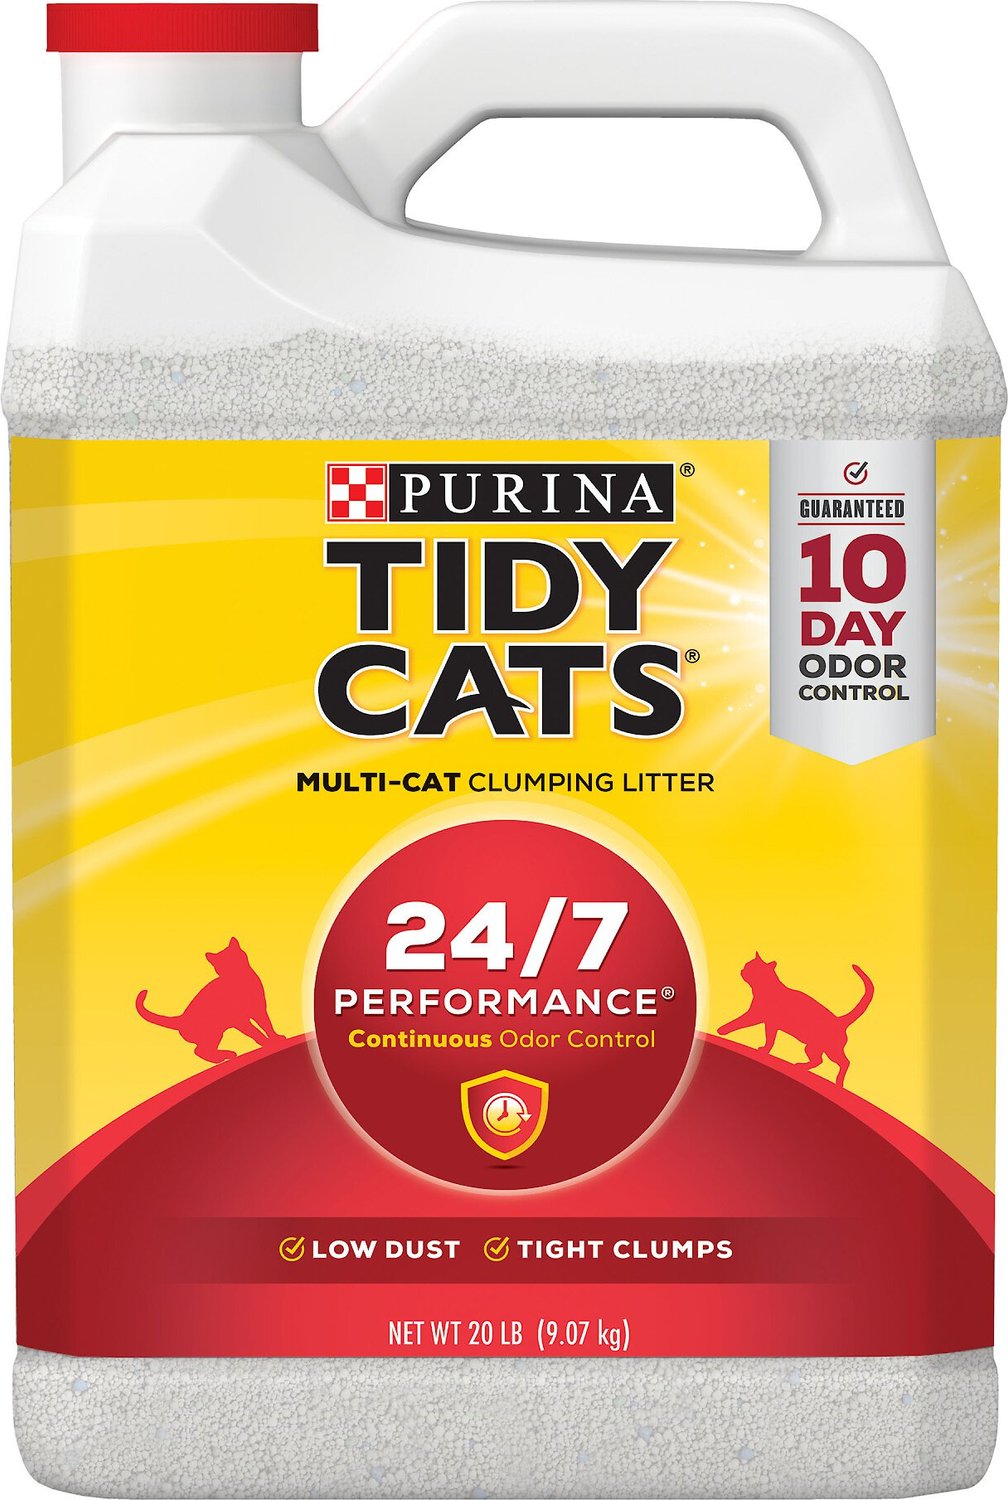 Tidy Cats 24/7 Performance Continuous Odor Control Cat Litter, 20lb